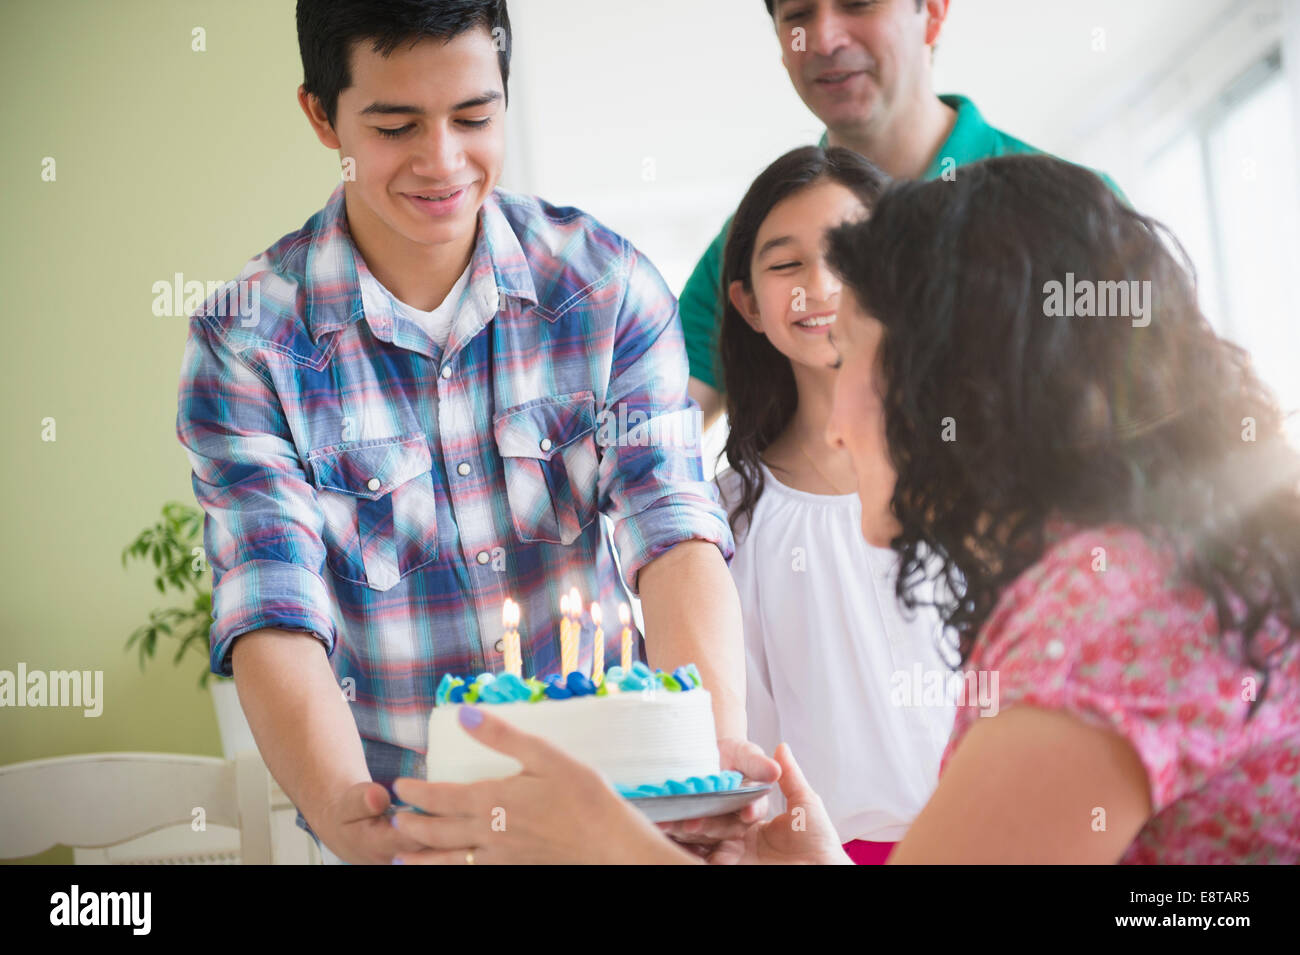 Hispanic family celebrating birthday together Stock Photo